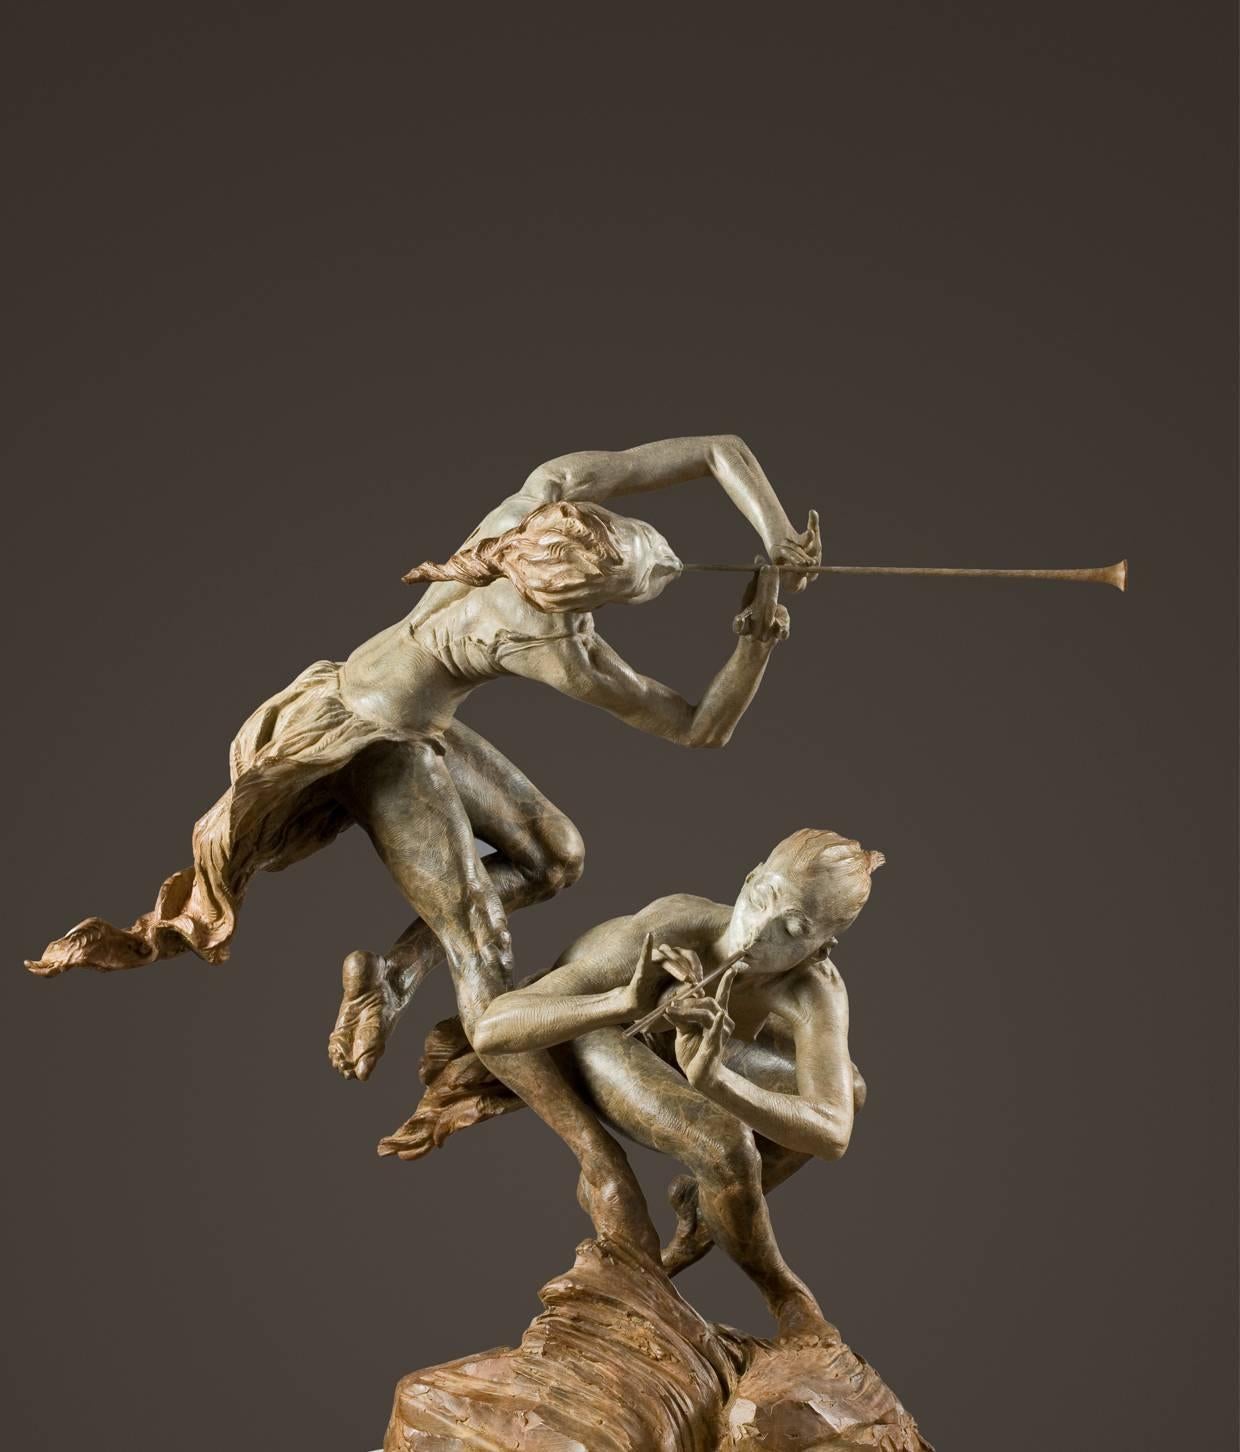 Joie de Femme, Atelier - Sculpture by Richard MacDonald